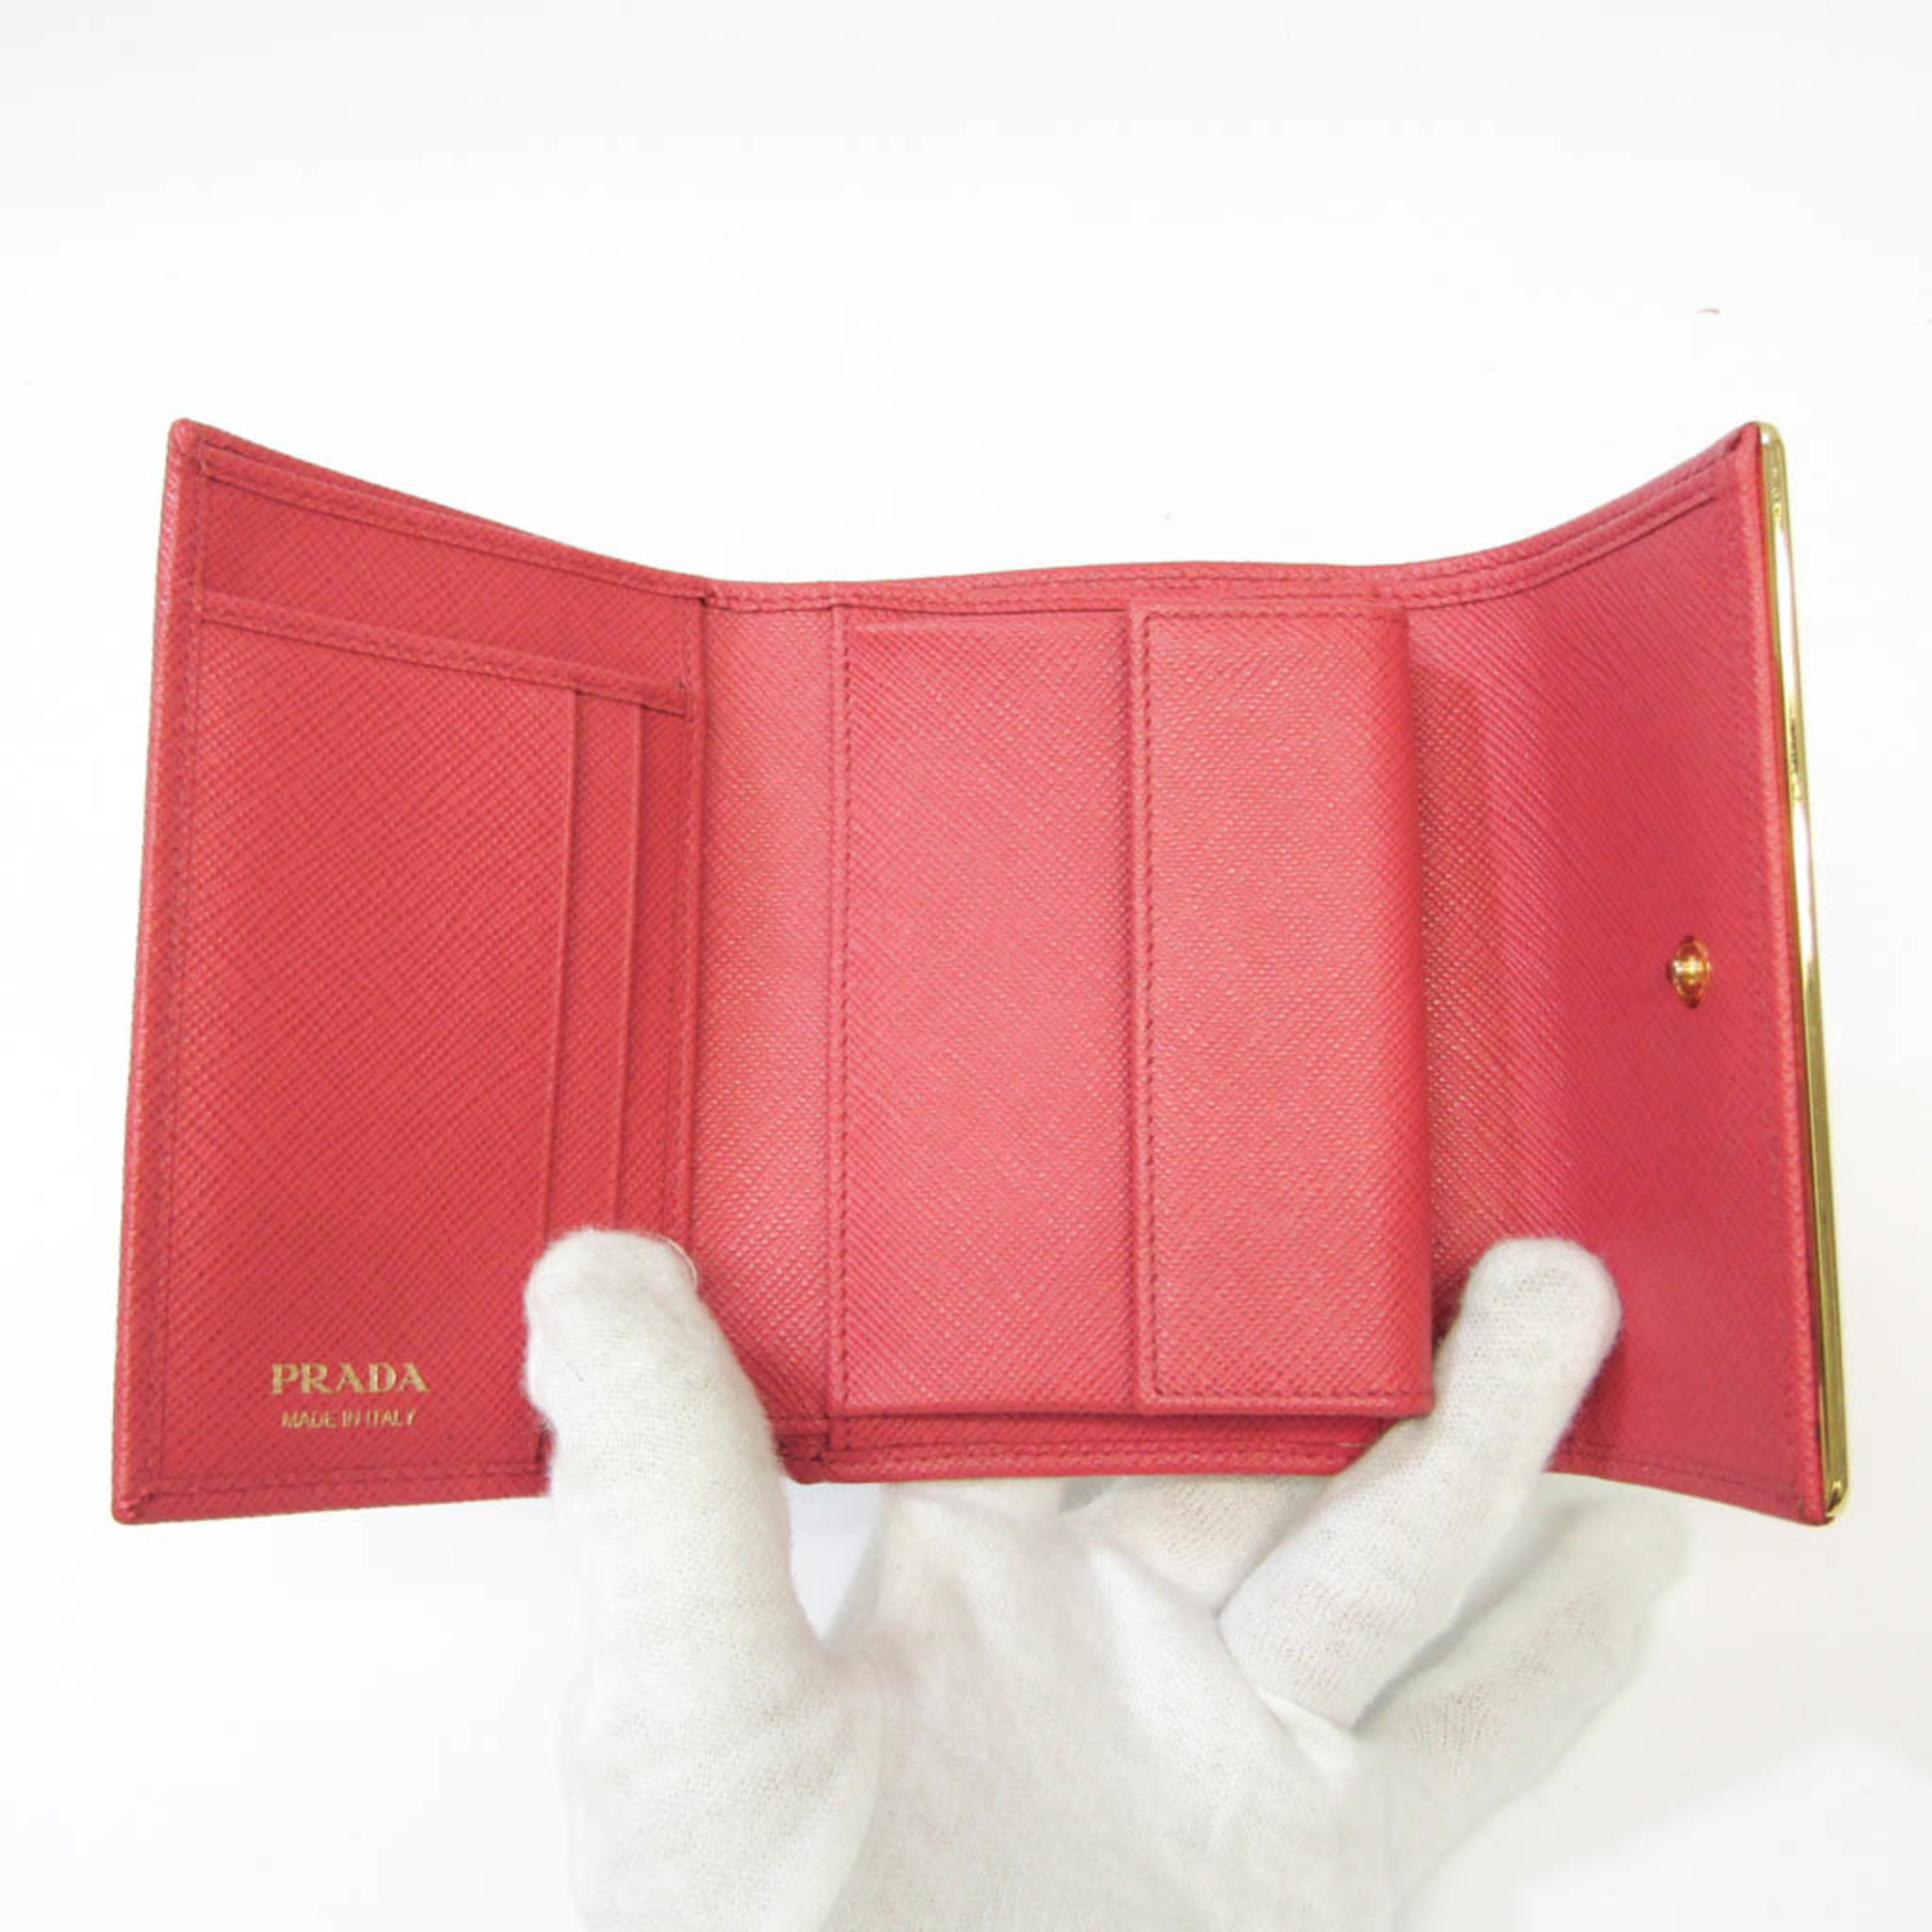 Prada Women's  Saffiano Leather Bill Wallet (tri-fold) Pink